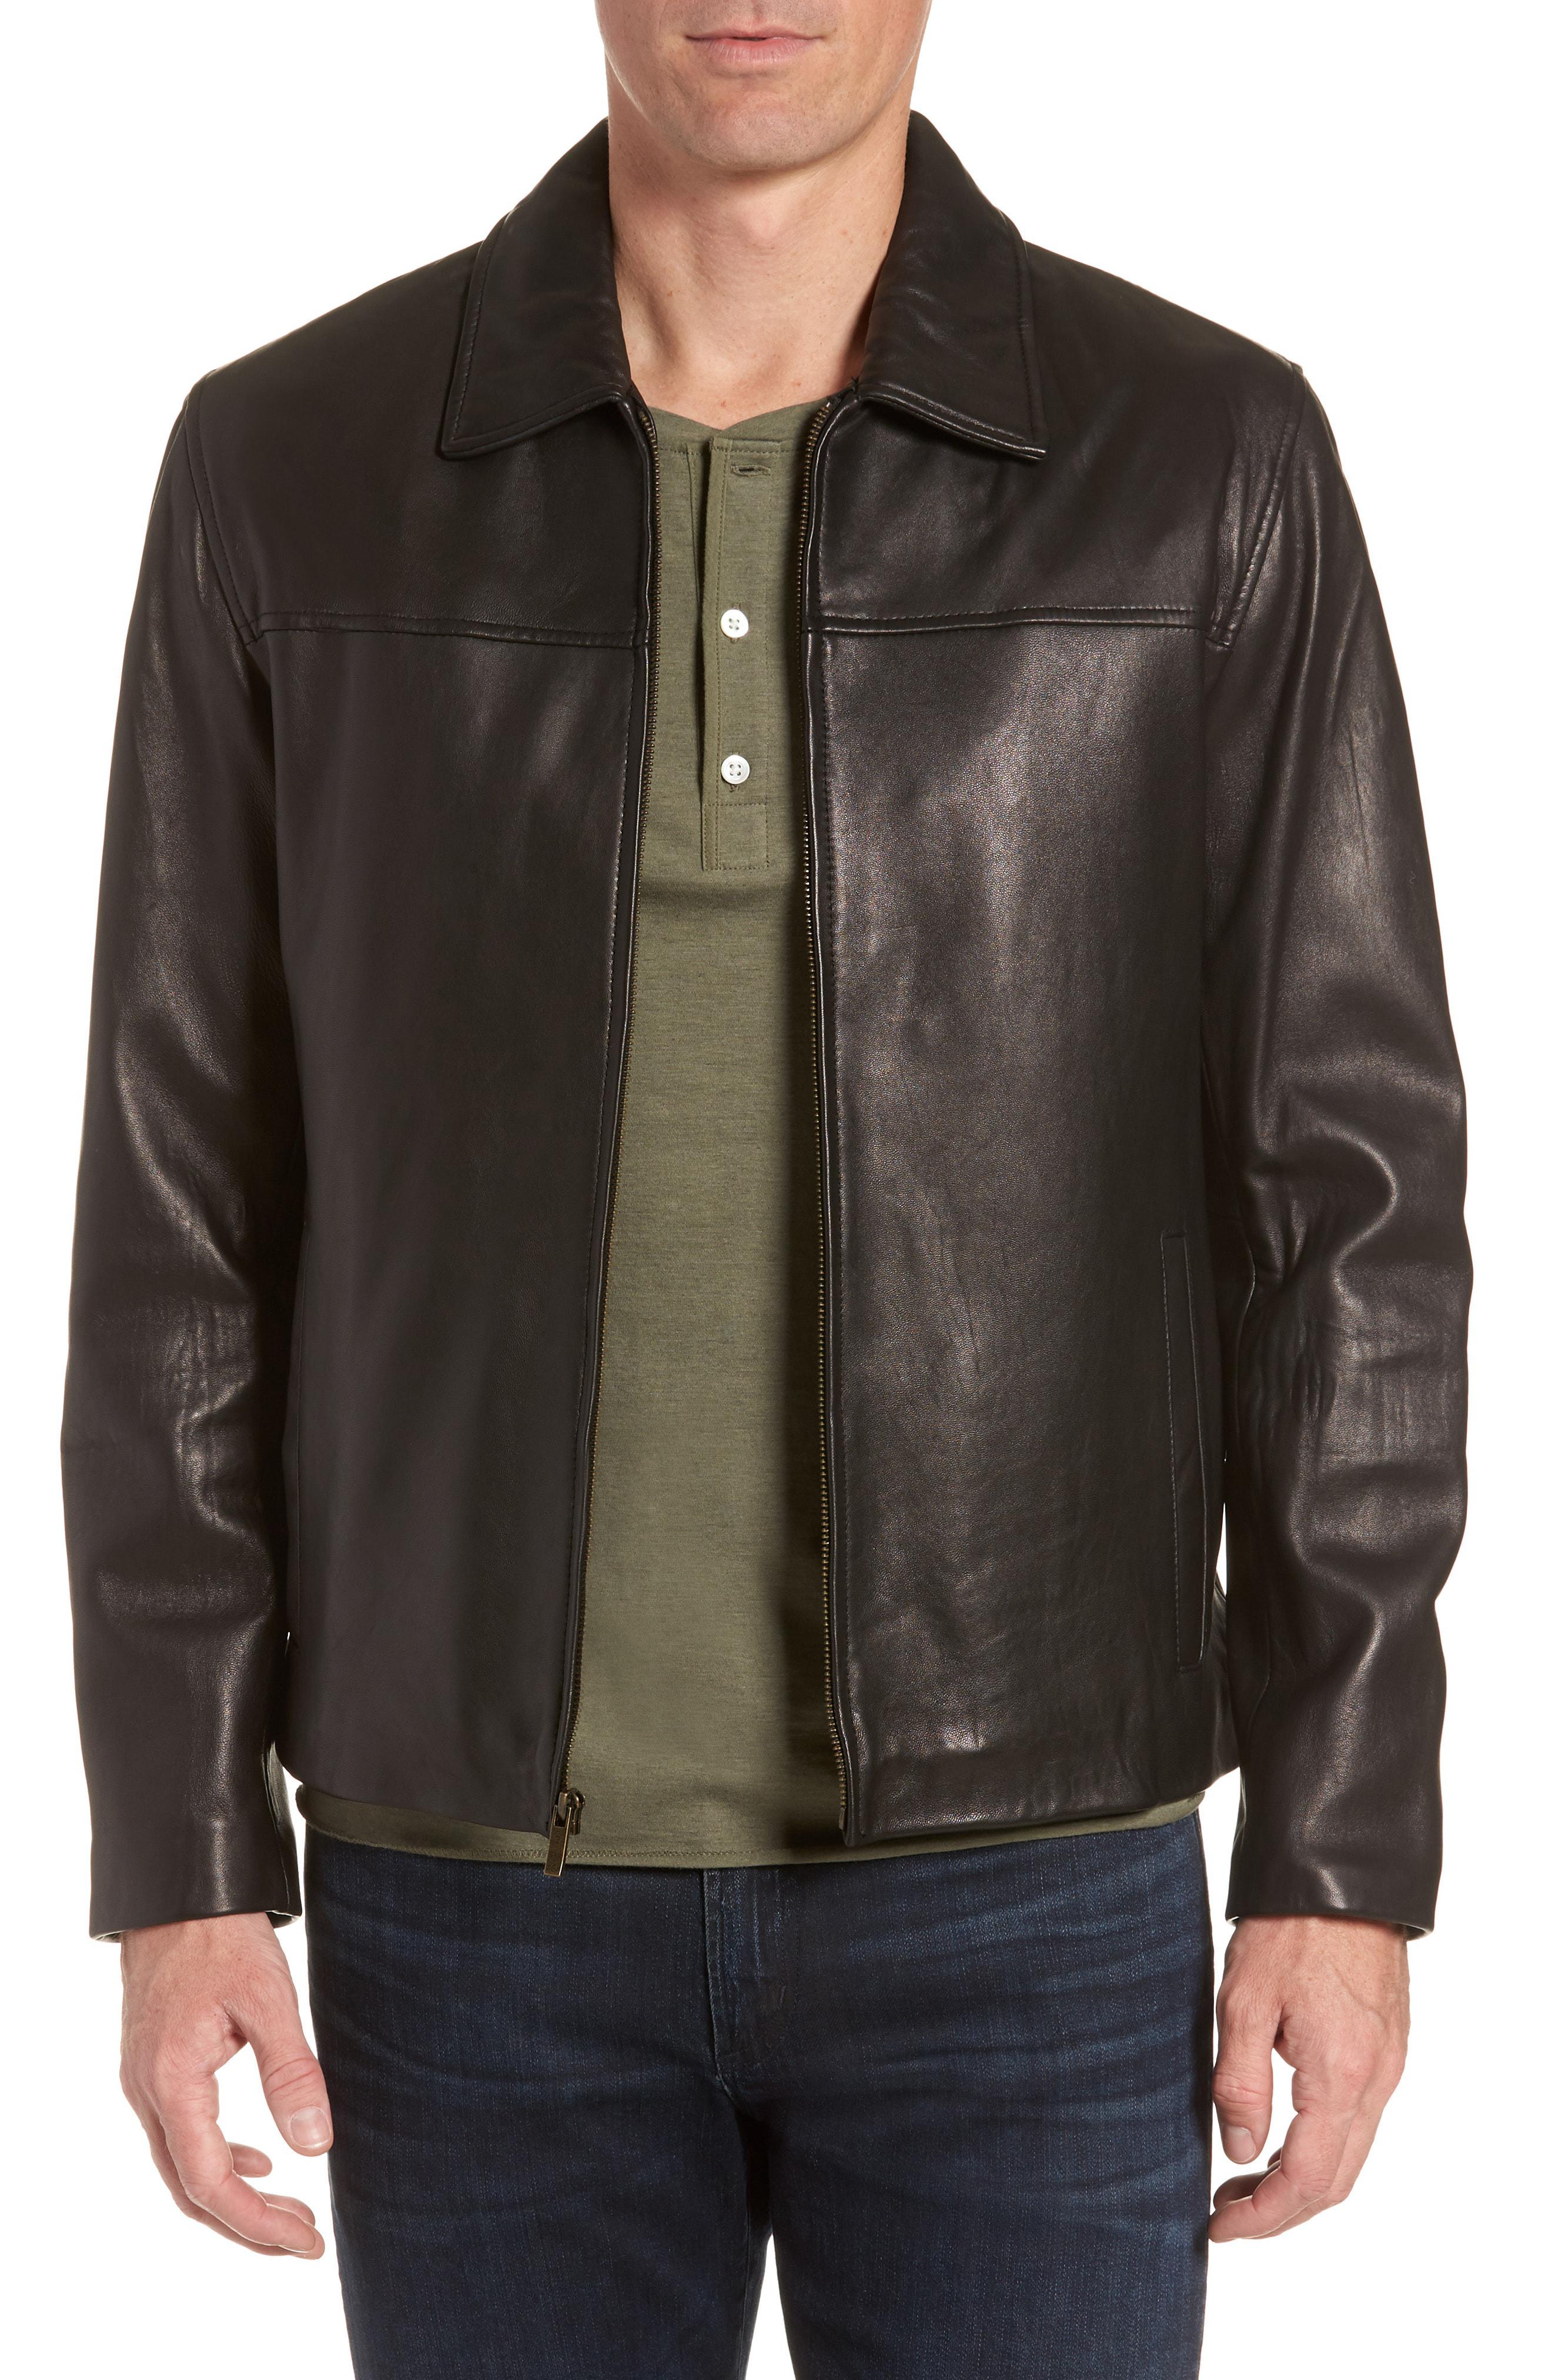 Lyst - Cole Haan Lambskin Leather Jacket in Black for Men